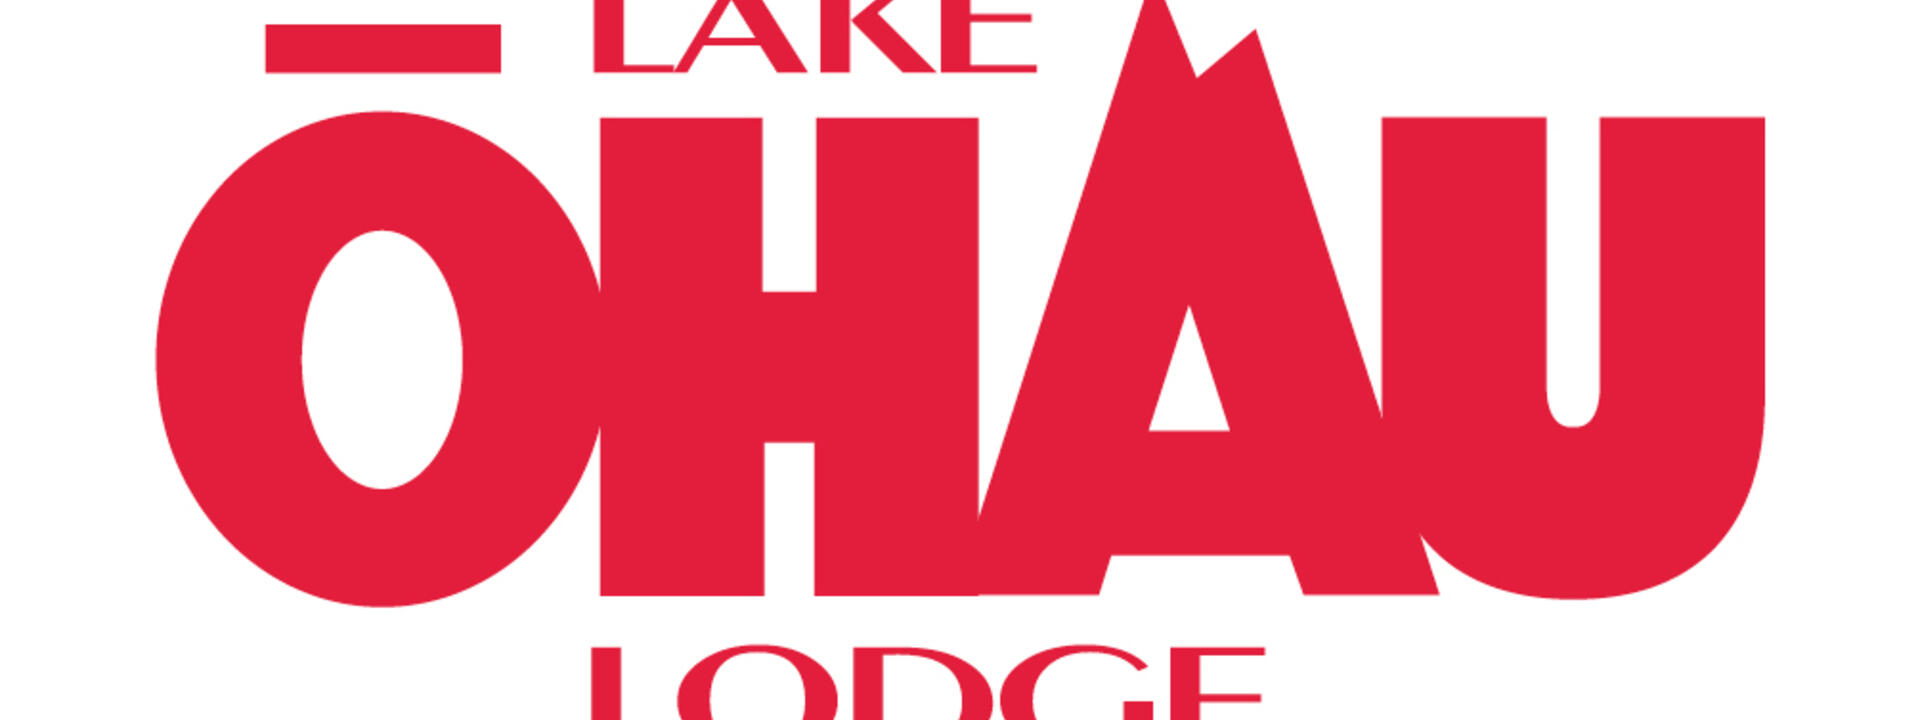 LakeOhauLodge-Logo-Red.jpg